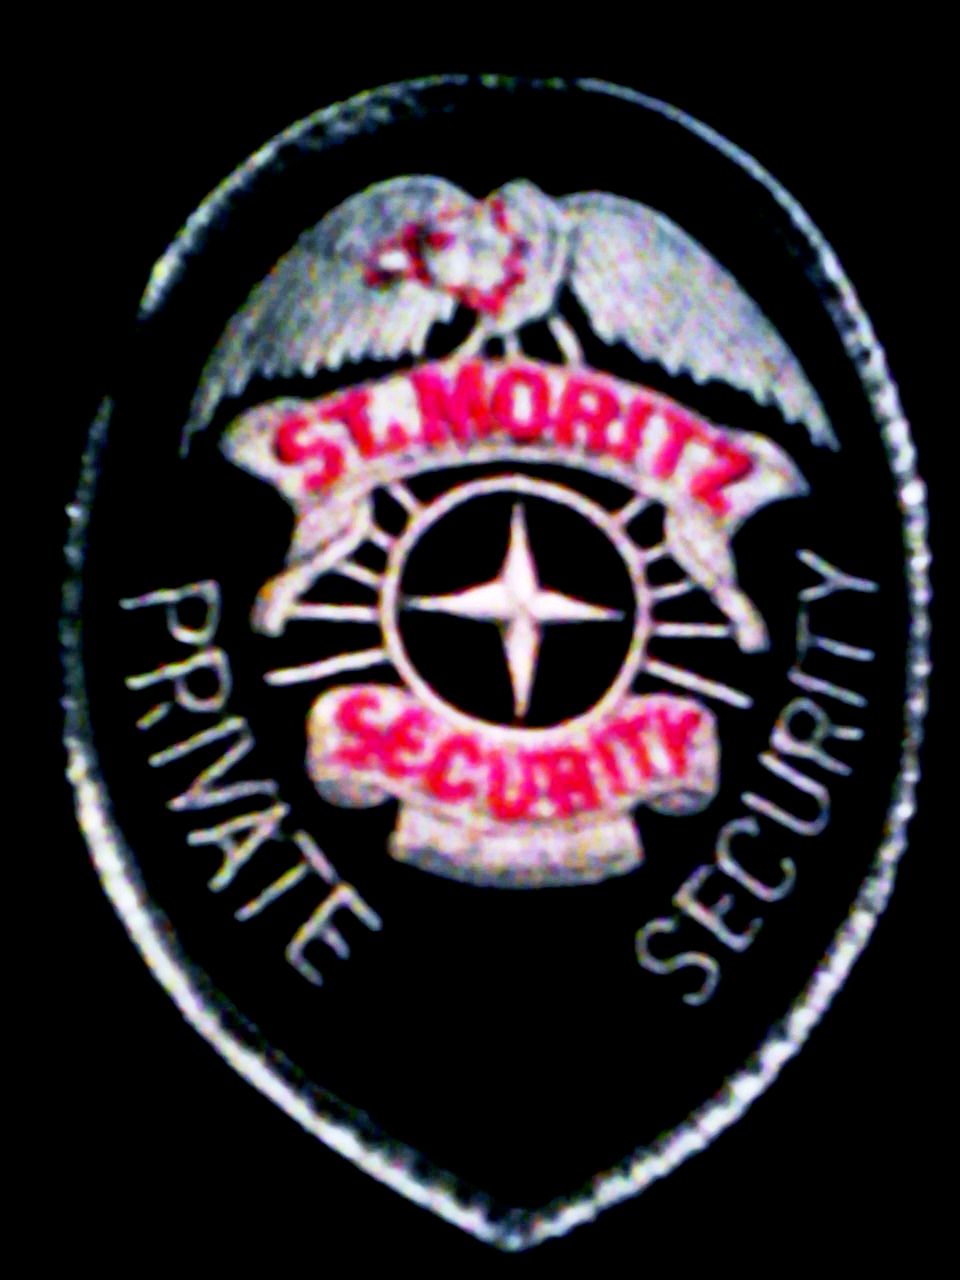 St. Moritz Security Services Inc.